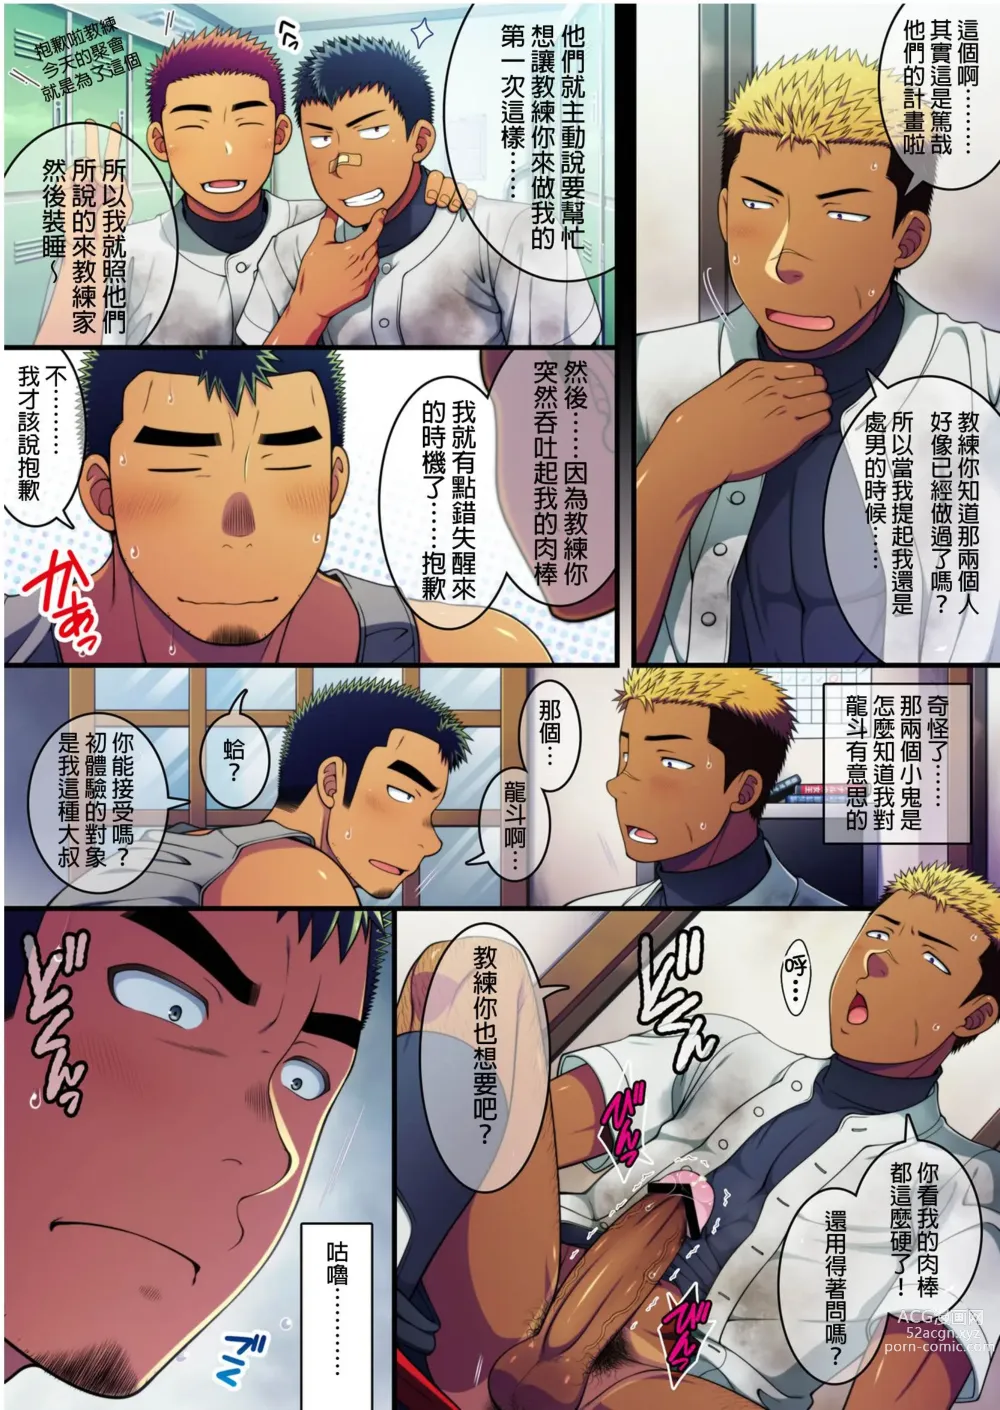 Page 12 of doujinshi 童貞教練暗戀著棒球隊隊員無法自拔著迷於他的大肉棒!